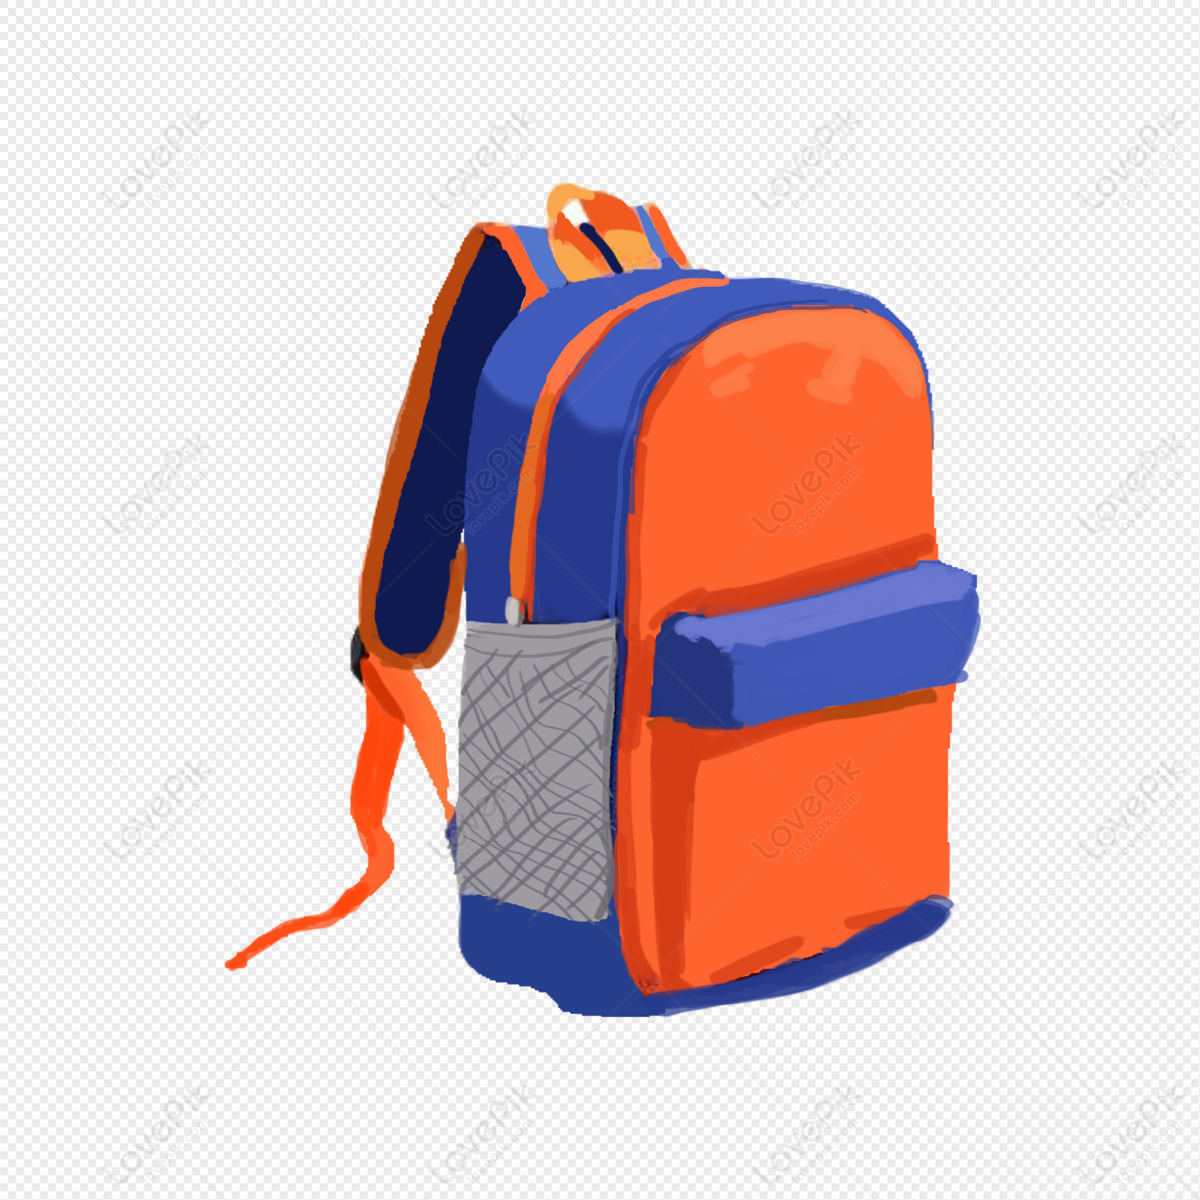 School bag png images | PNGEgg